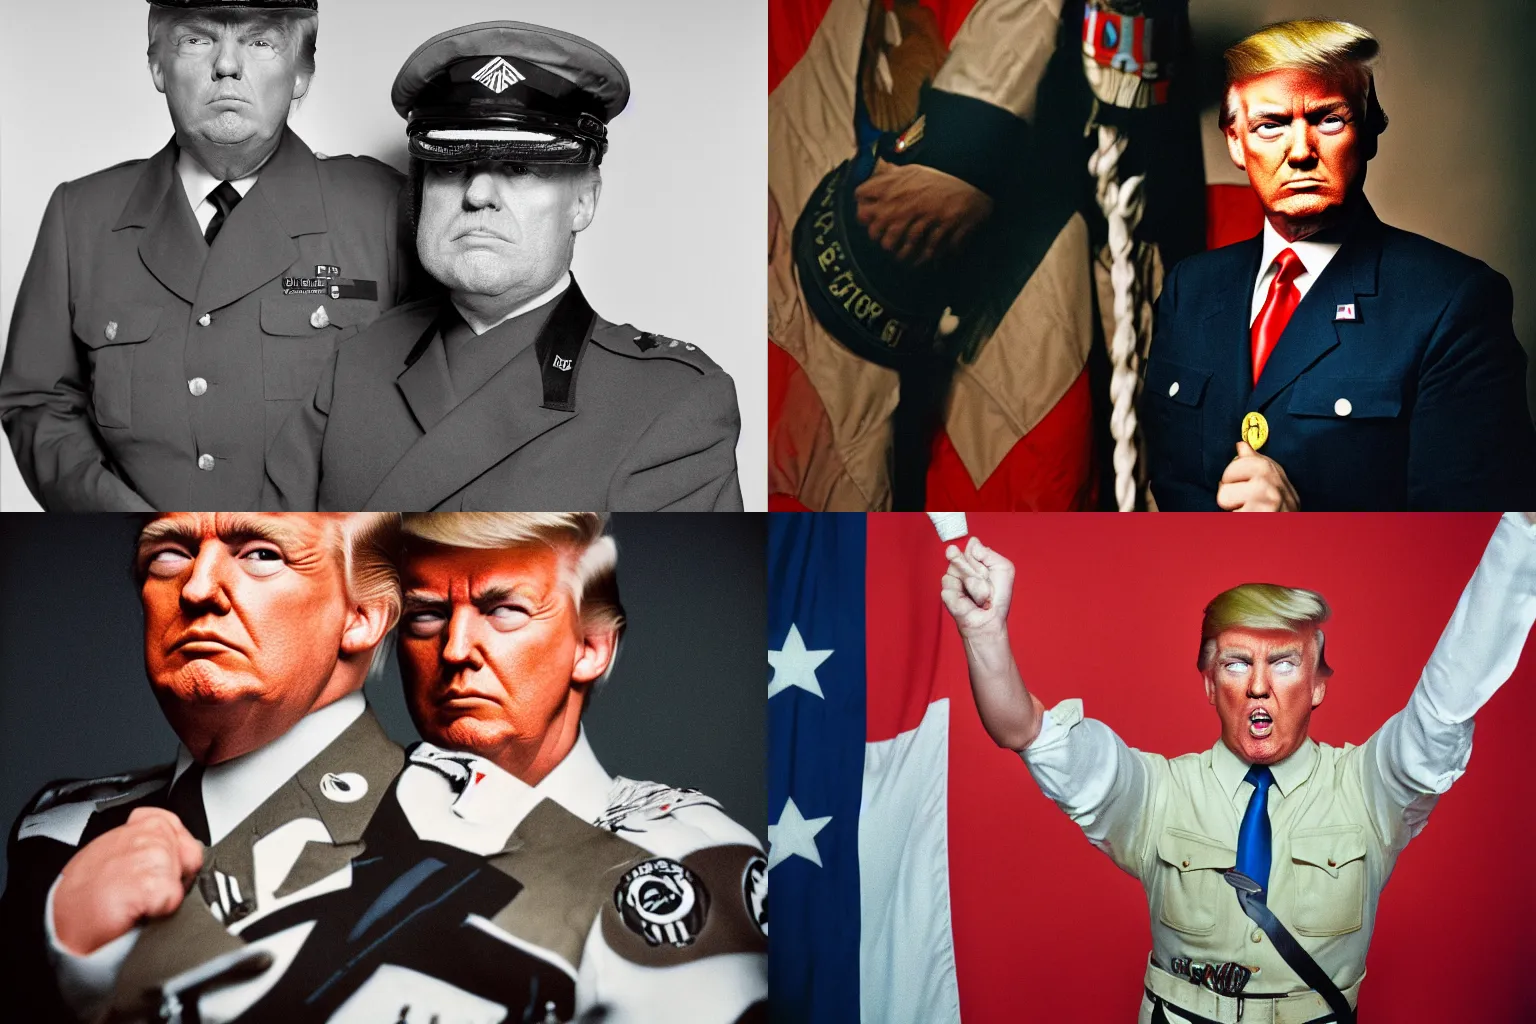 Prompt: solo upper body portrait photograph of a (Donald Trump wearing Reichsführer outfit), off-camera flash, canon 35mm lens f8 aperture, color Ektachrome photograph, single point of light